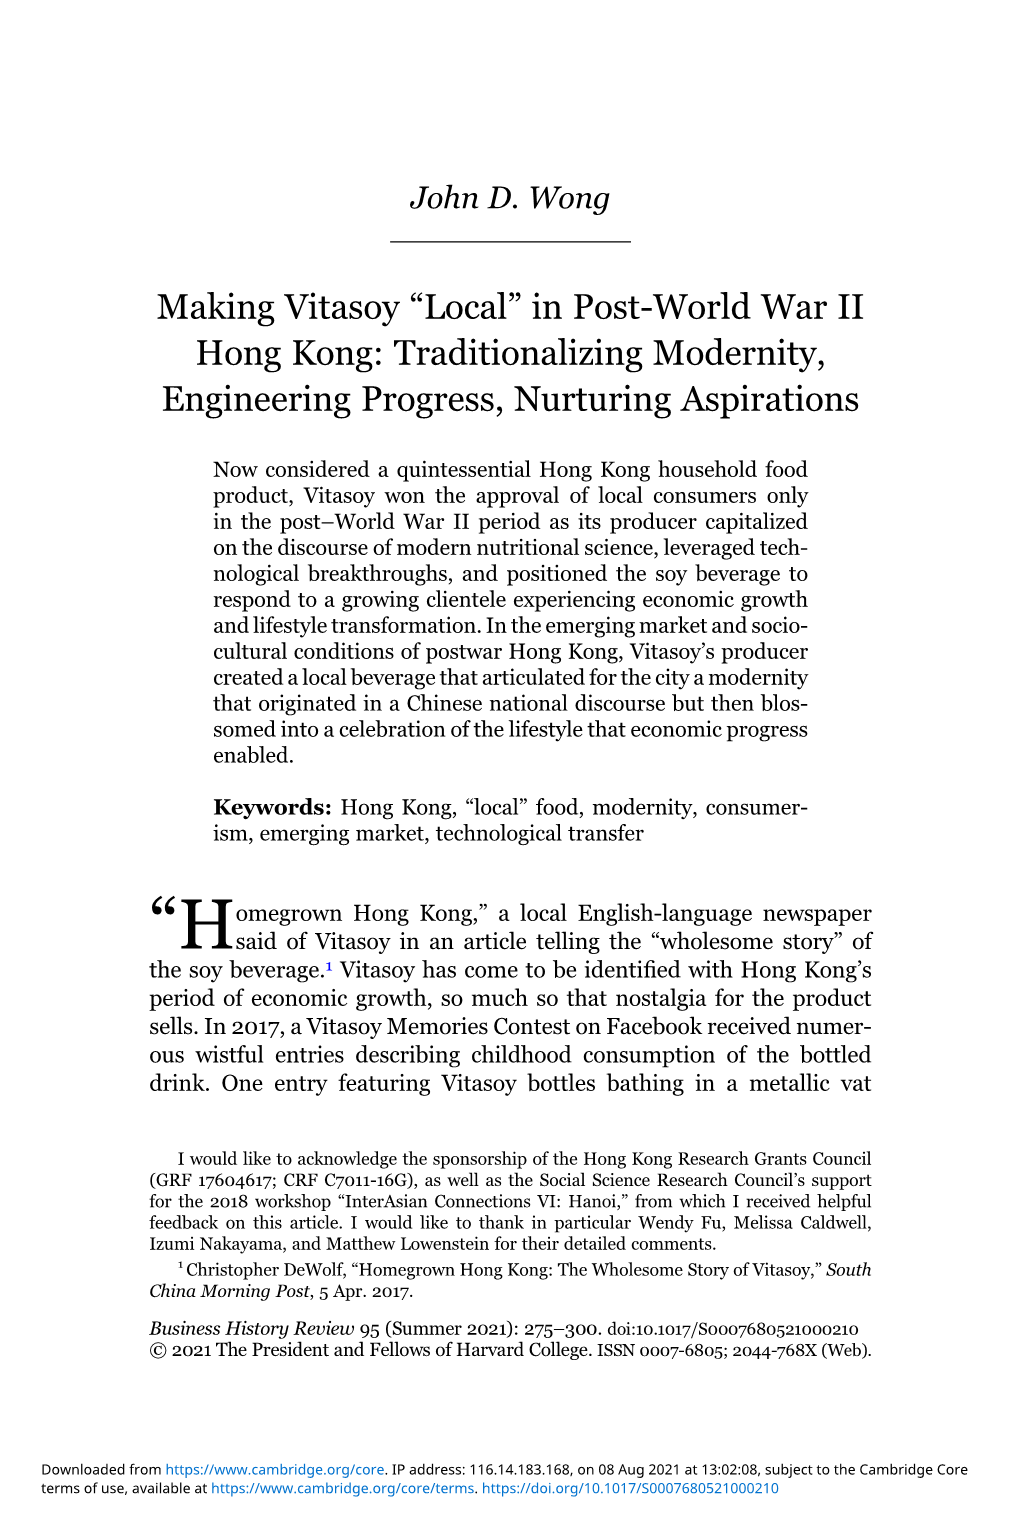 Making Vitasoy “Local” in Post-World War II Hong Kong: Traditionalizing Modernity, Engineering Progress, Nurturing Aspirations